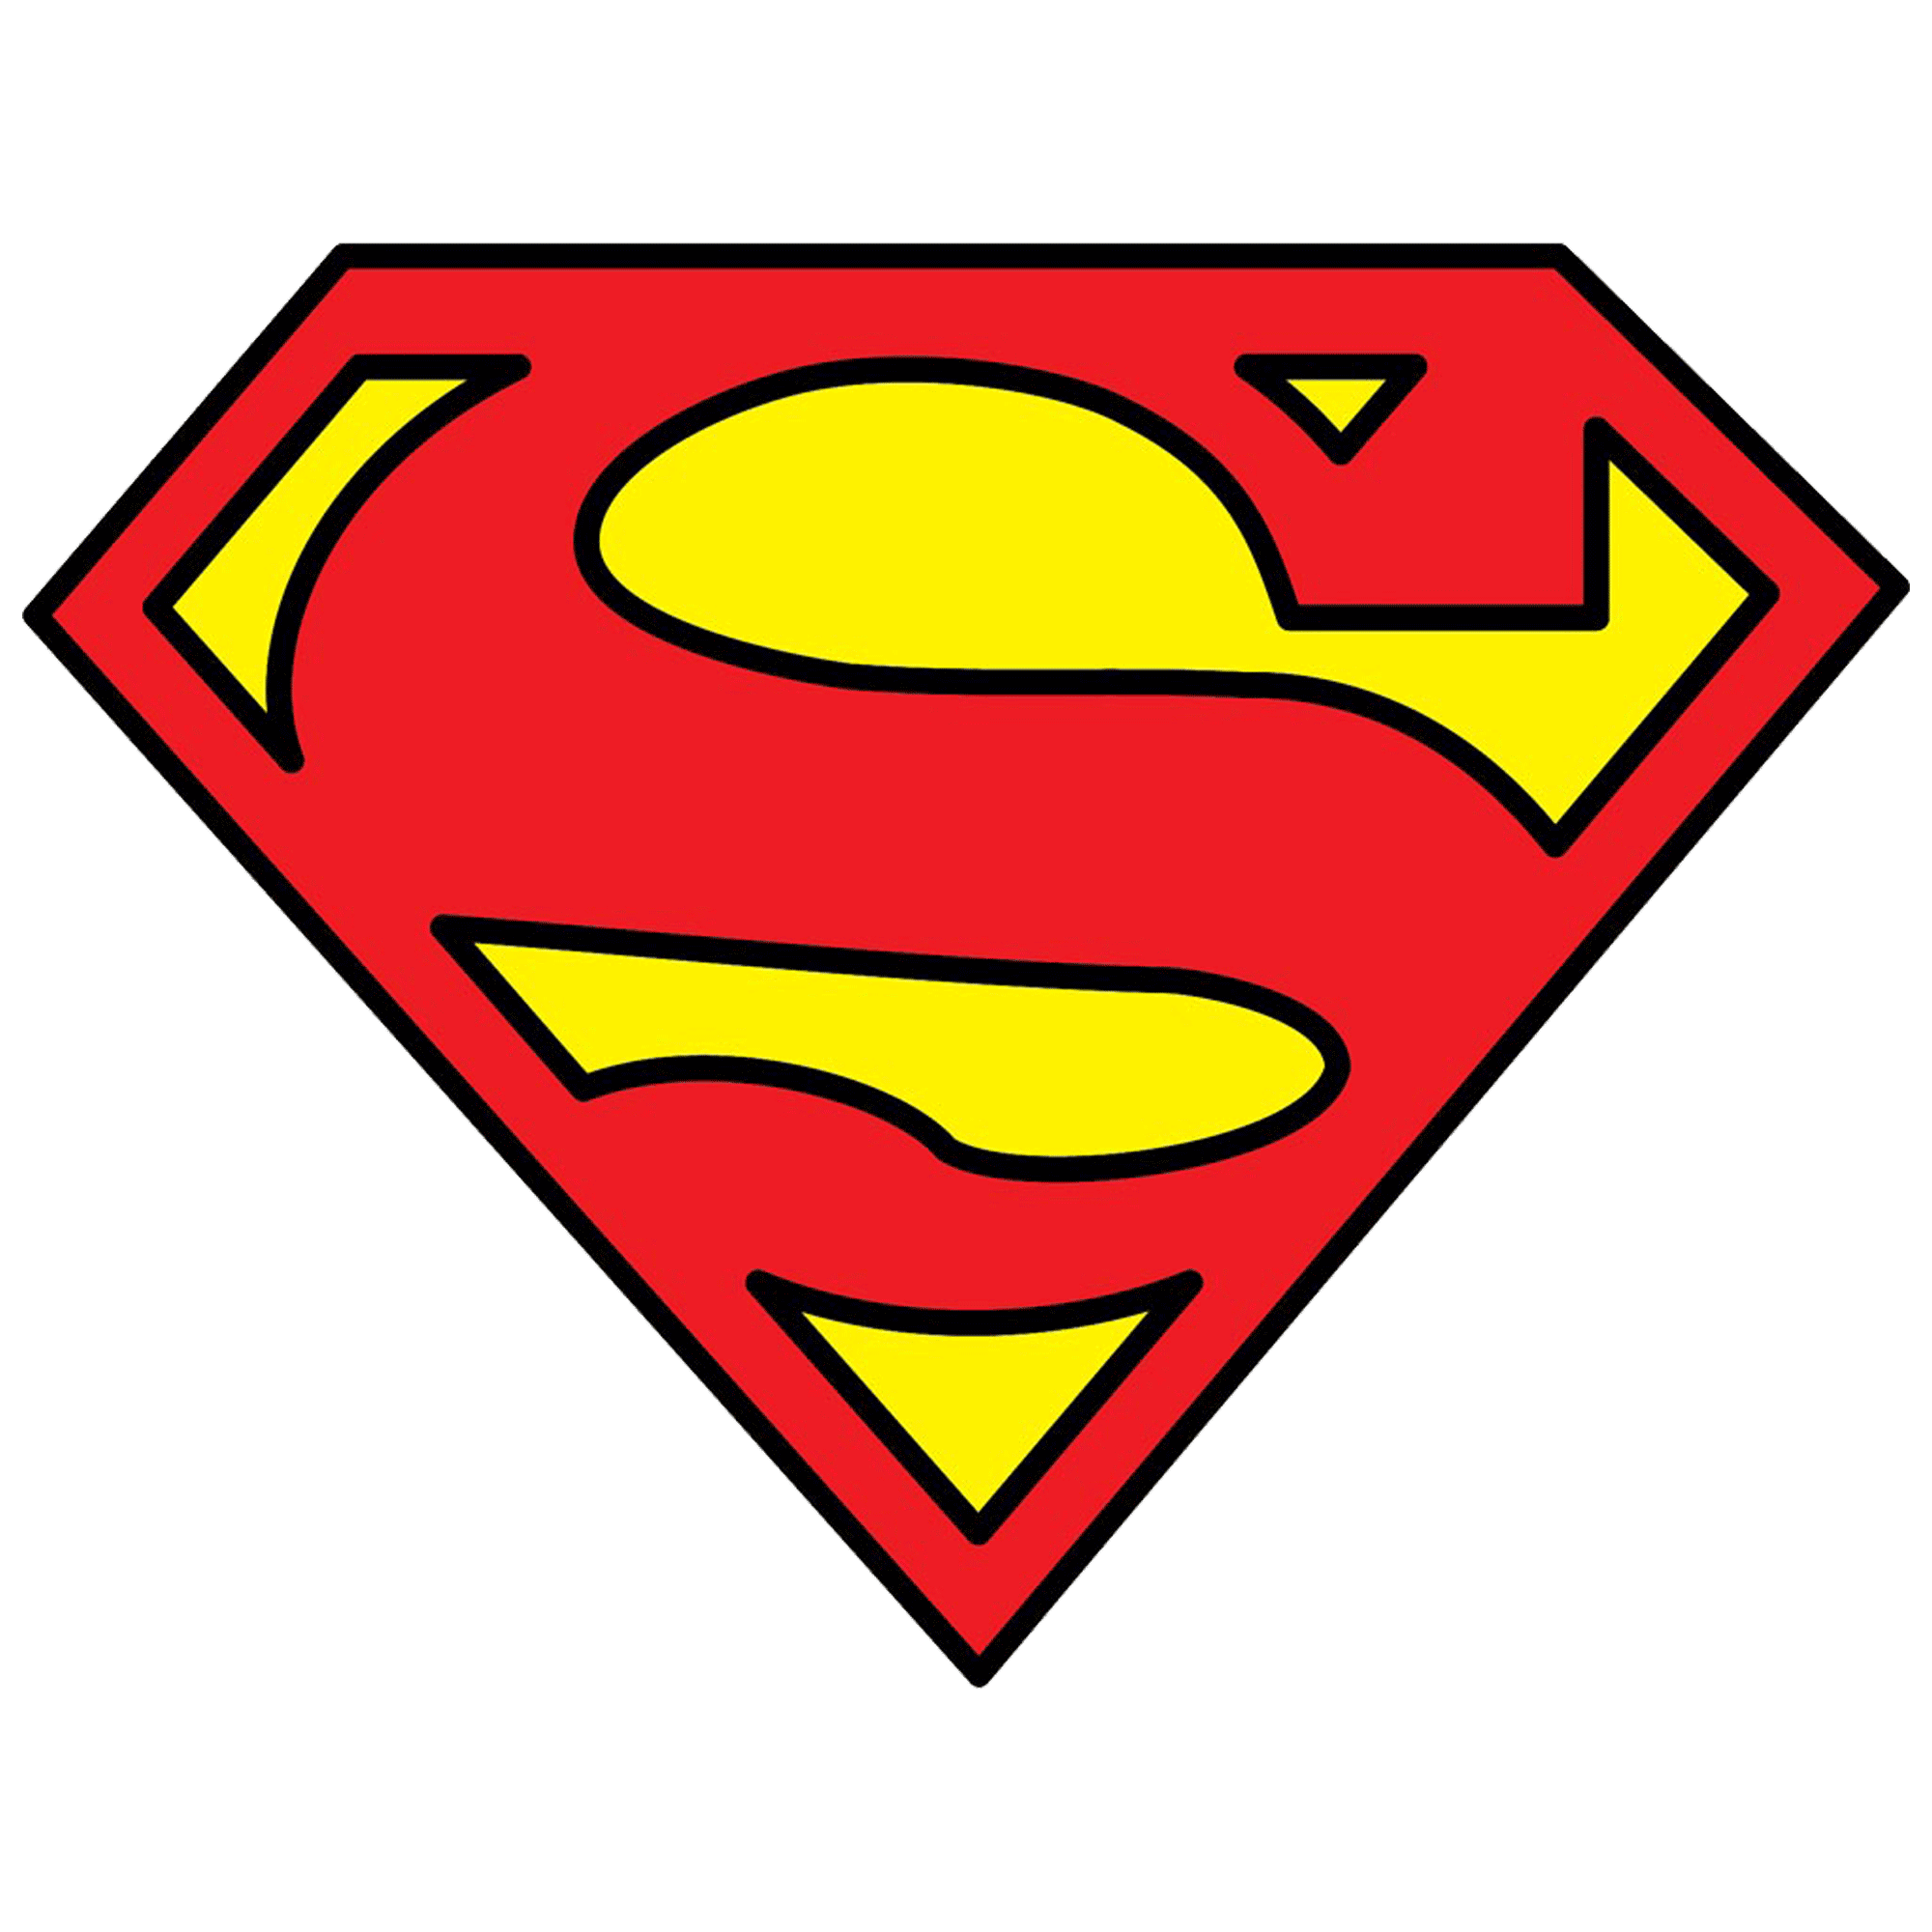 Superman Logo Template Cliparts.co